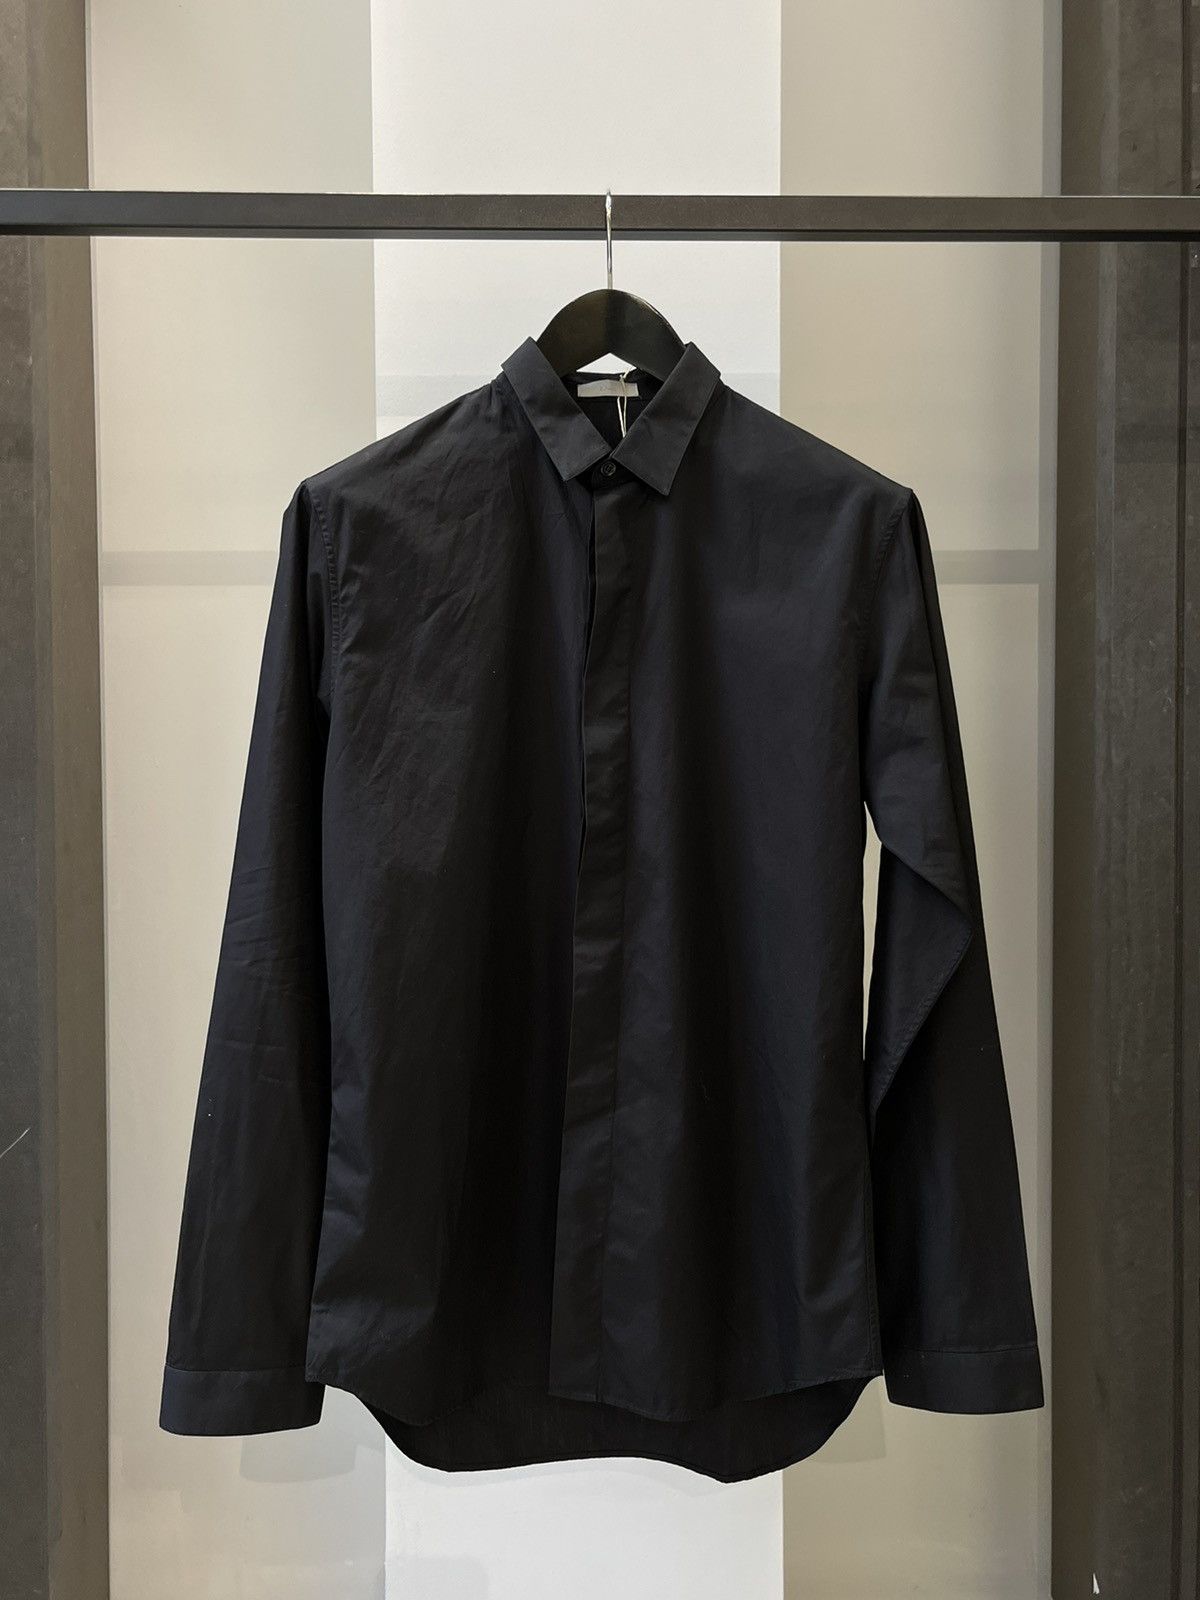 Dior Dior Homme Black Button Up Shirt | Grailed